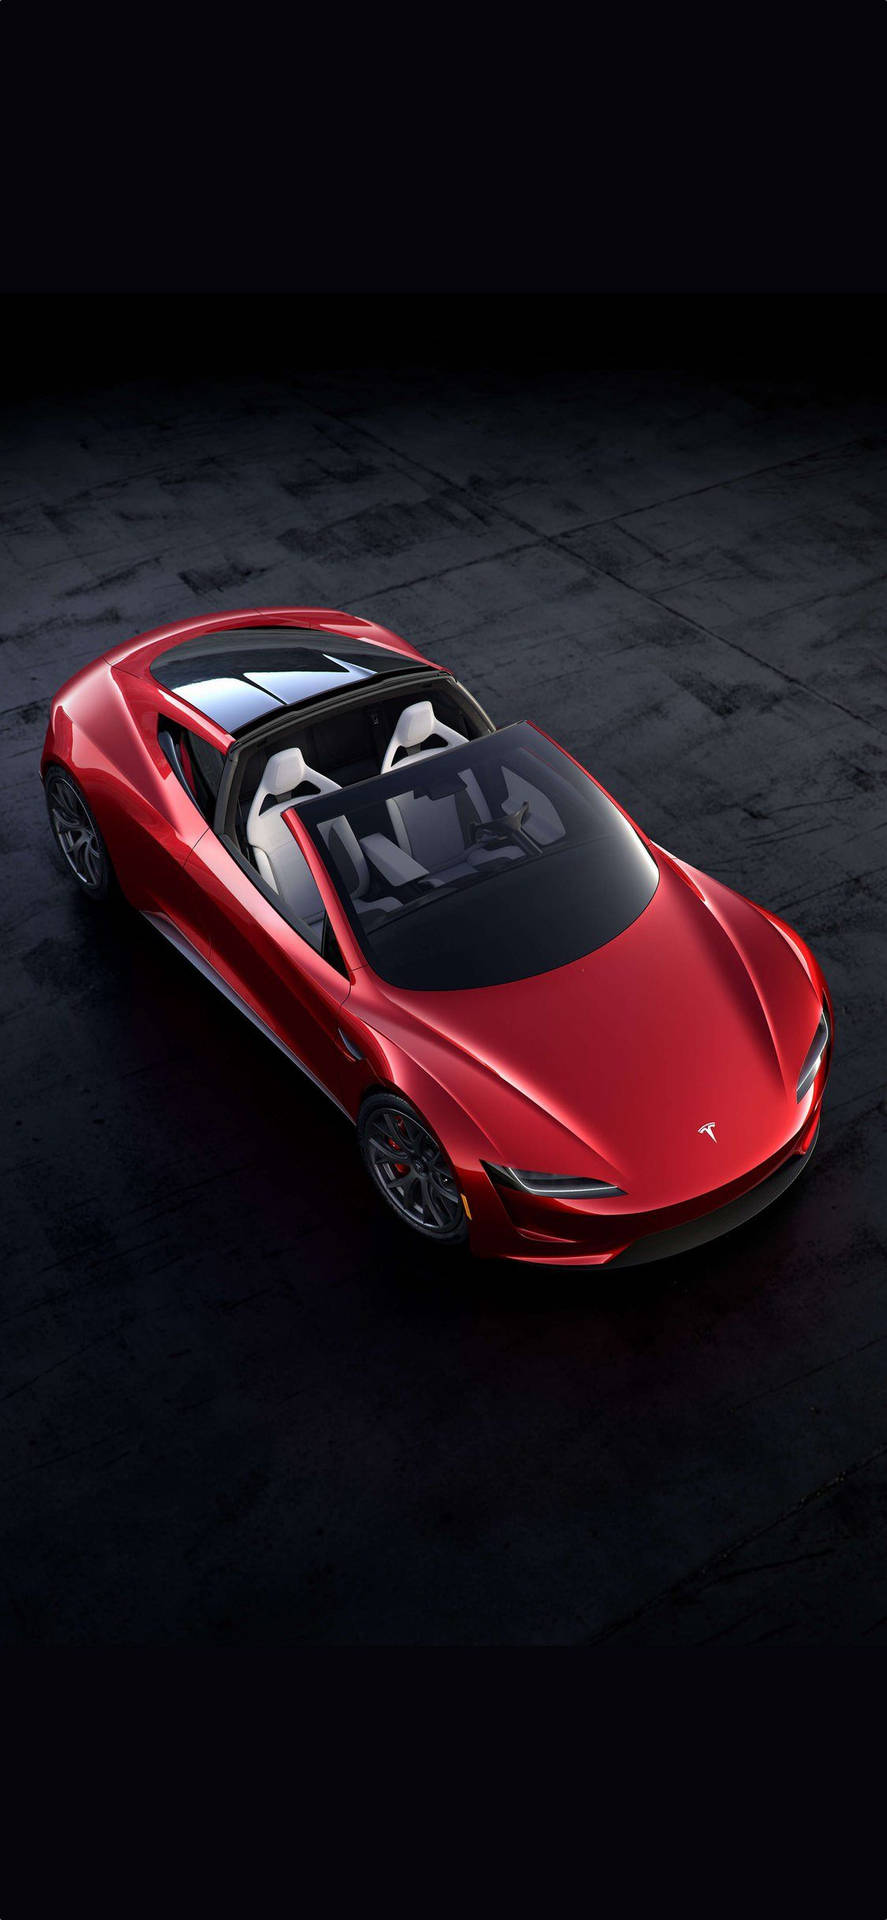 Red Tesla Roadster iPhone Car Wallpaper